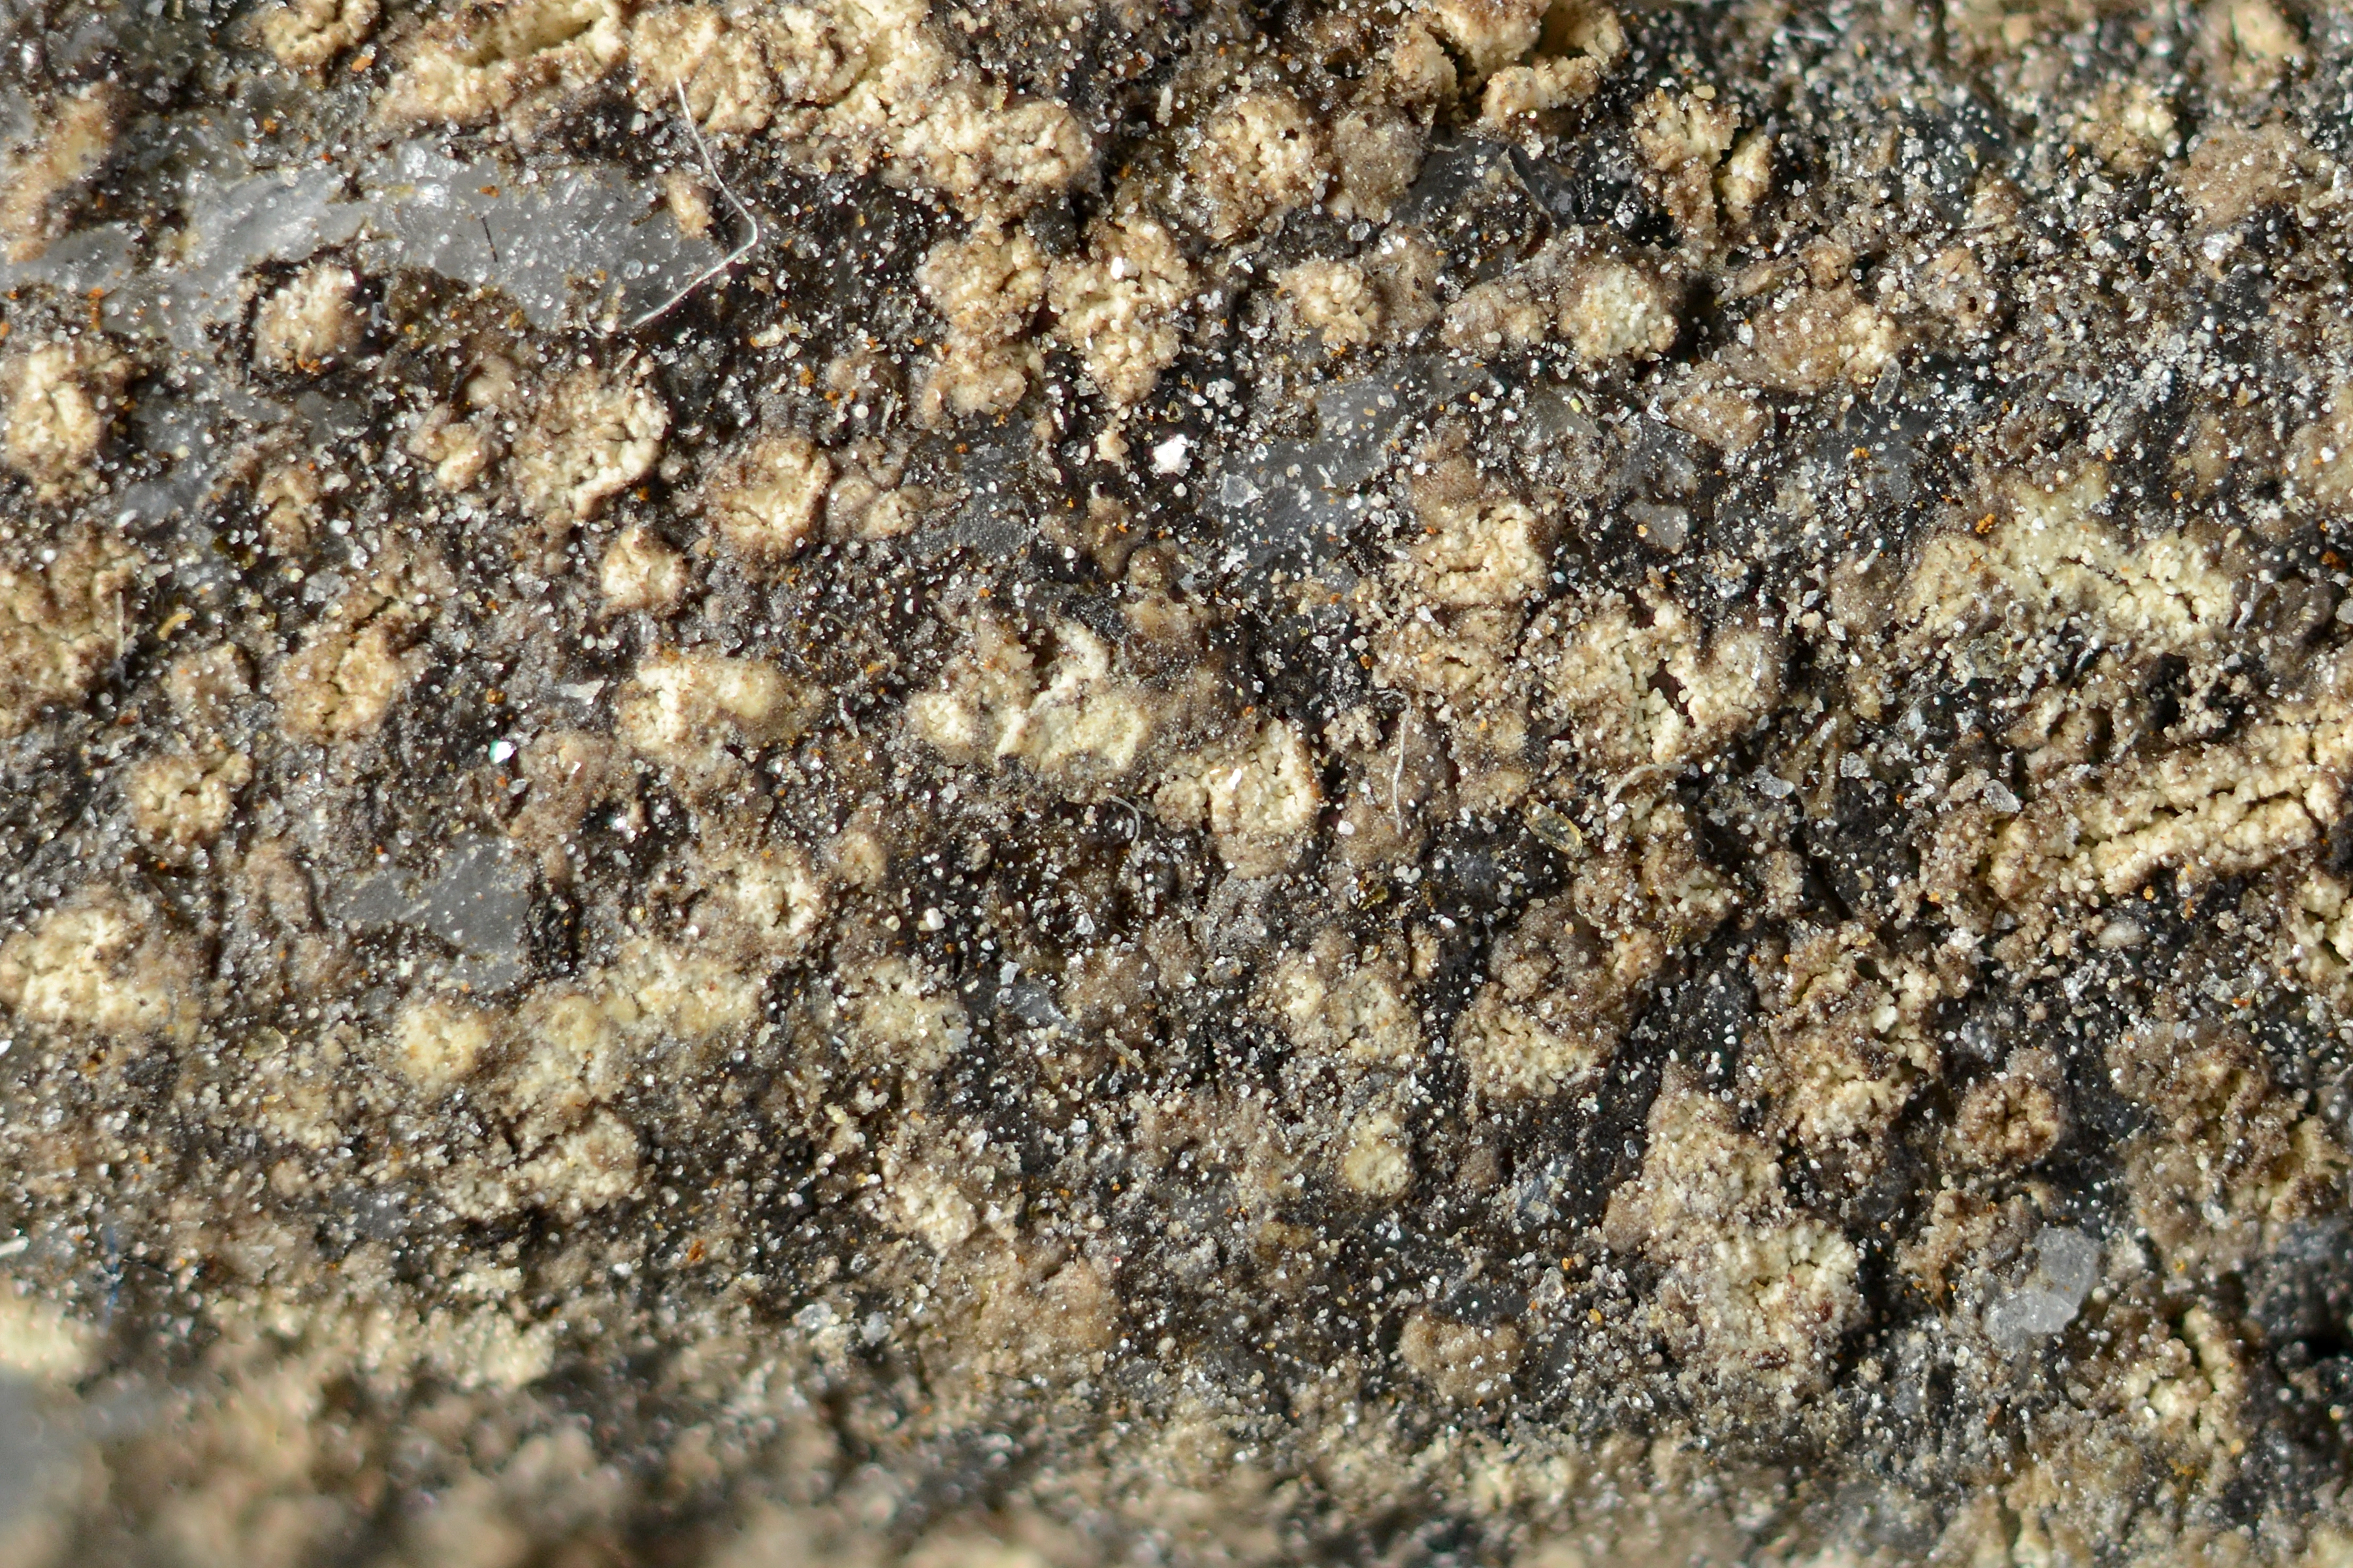 Messinglavordenen: Ropalospora hibernica.